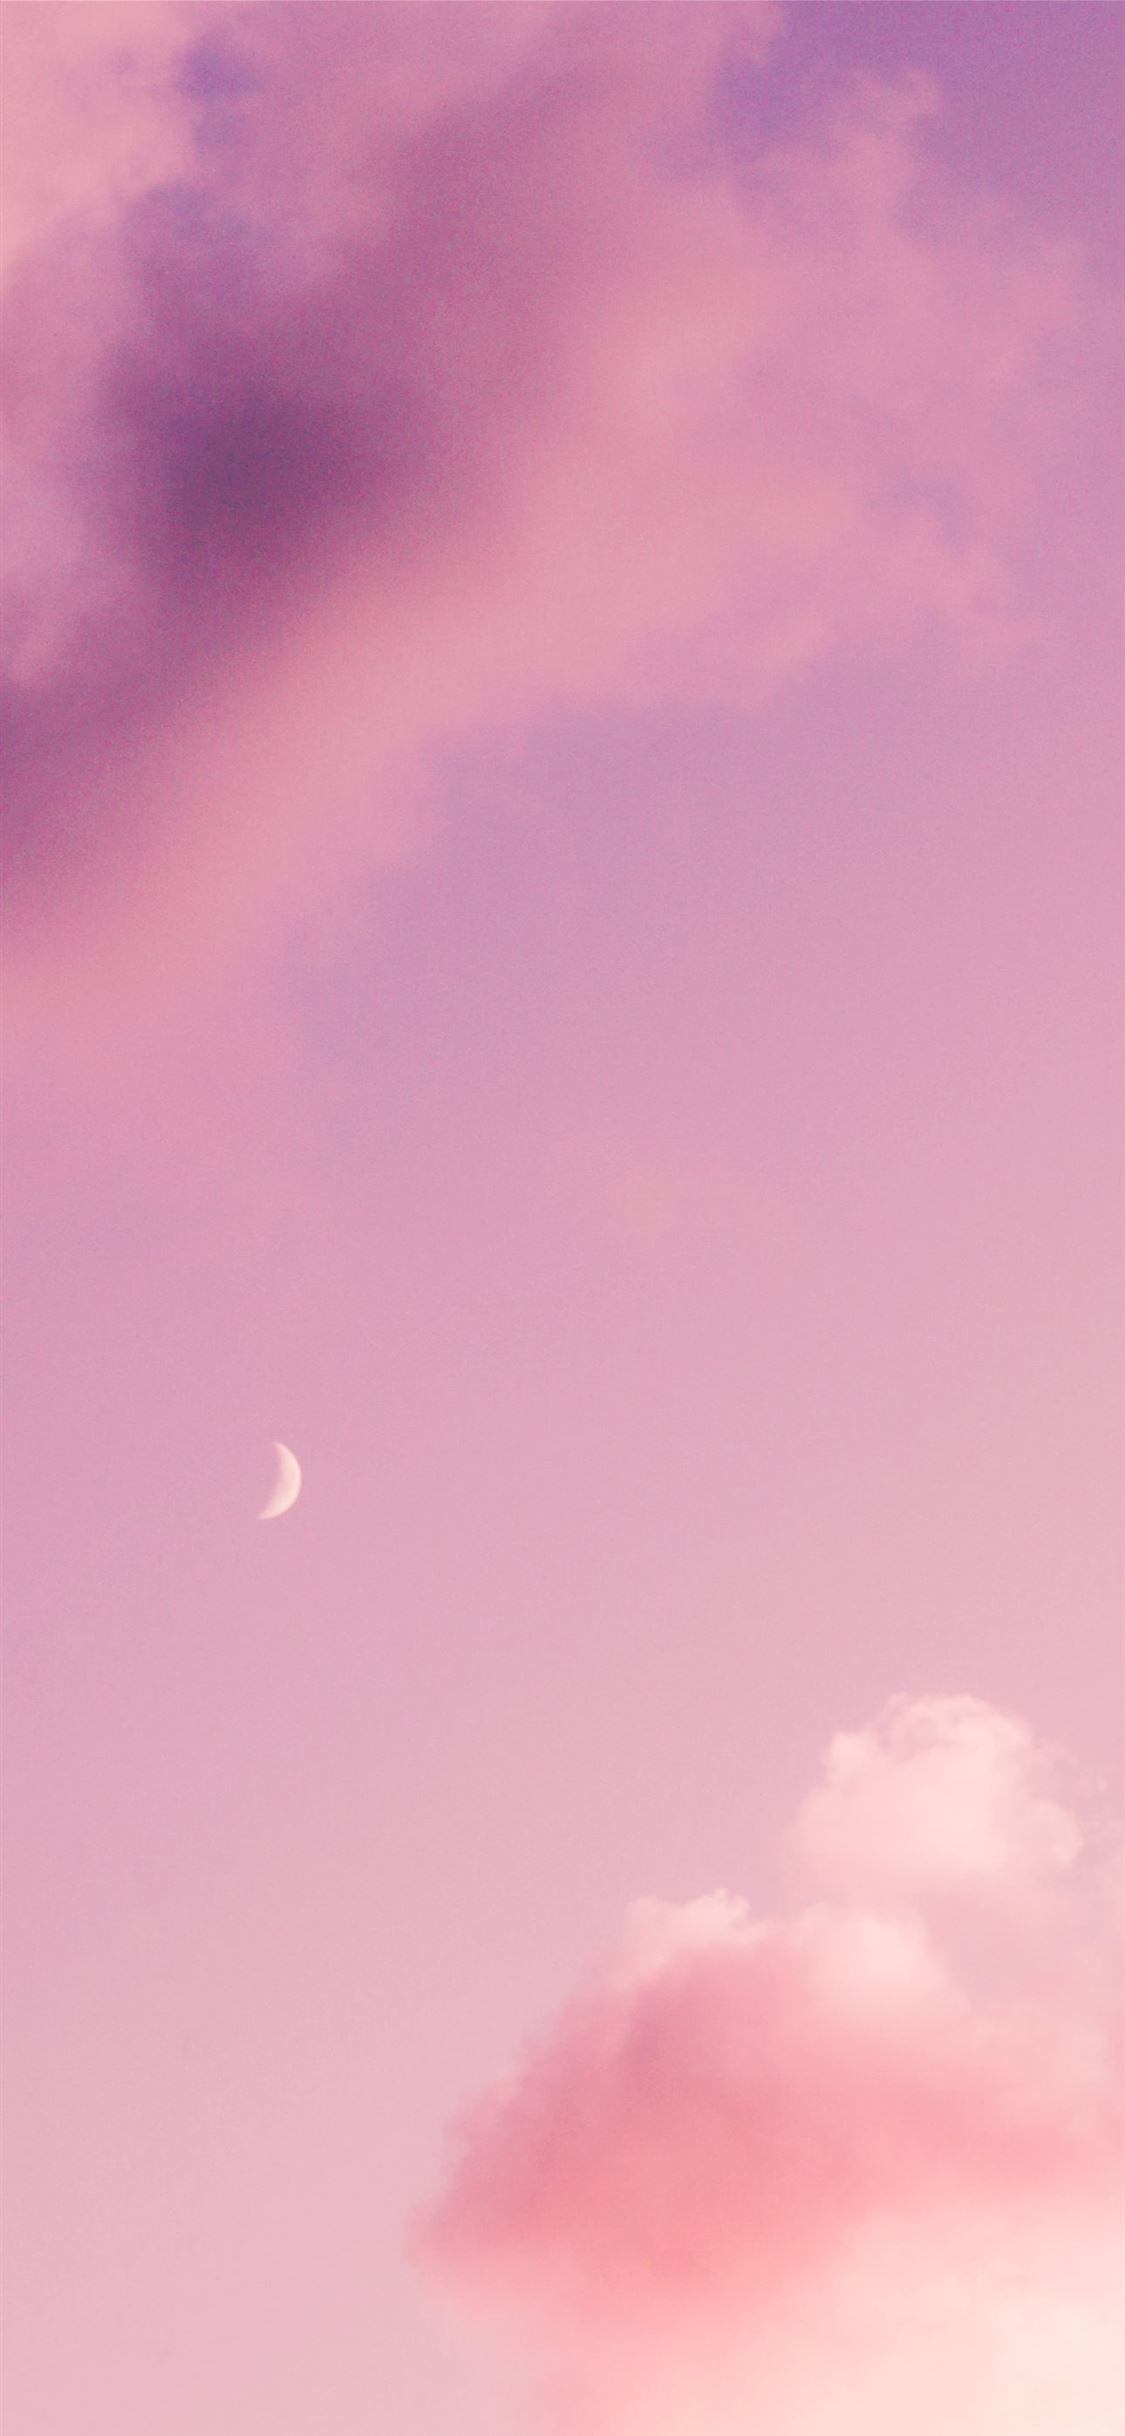 Moon against purple sky iPhone wallpaper 